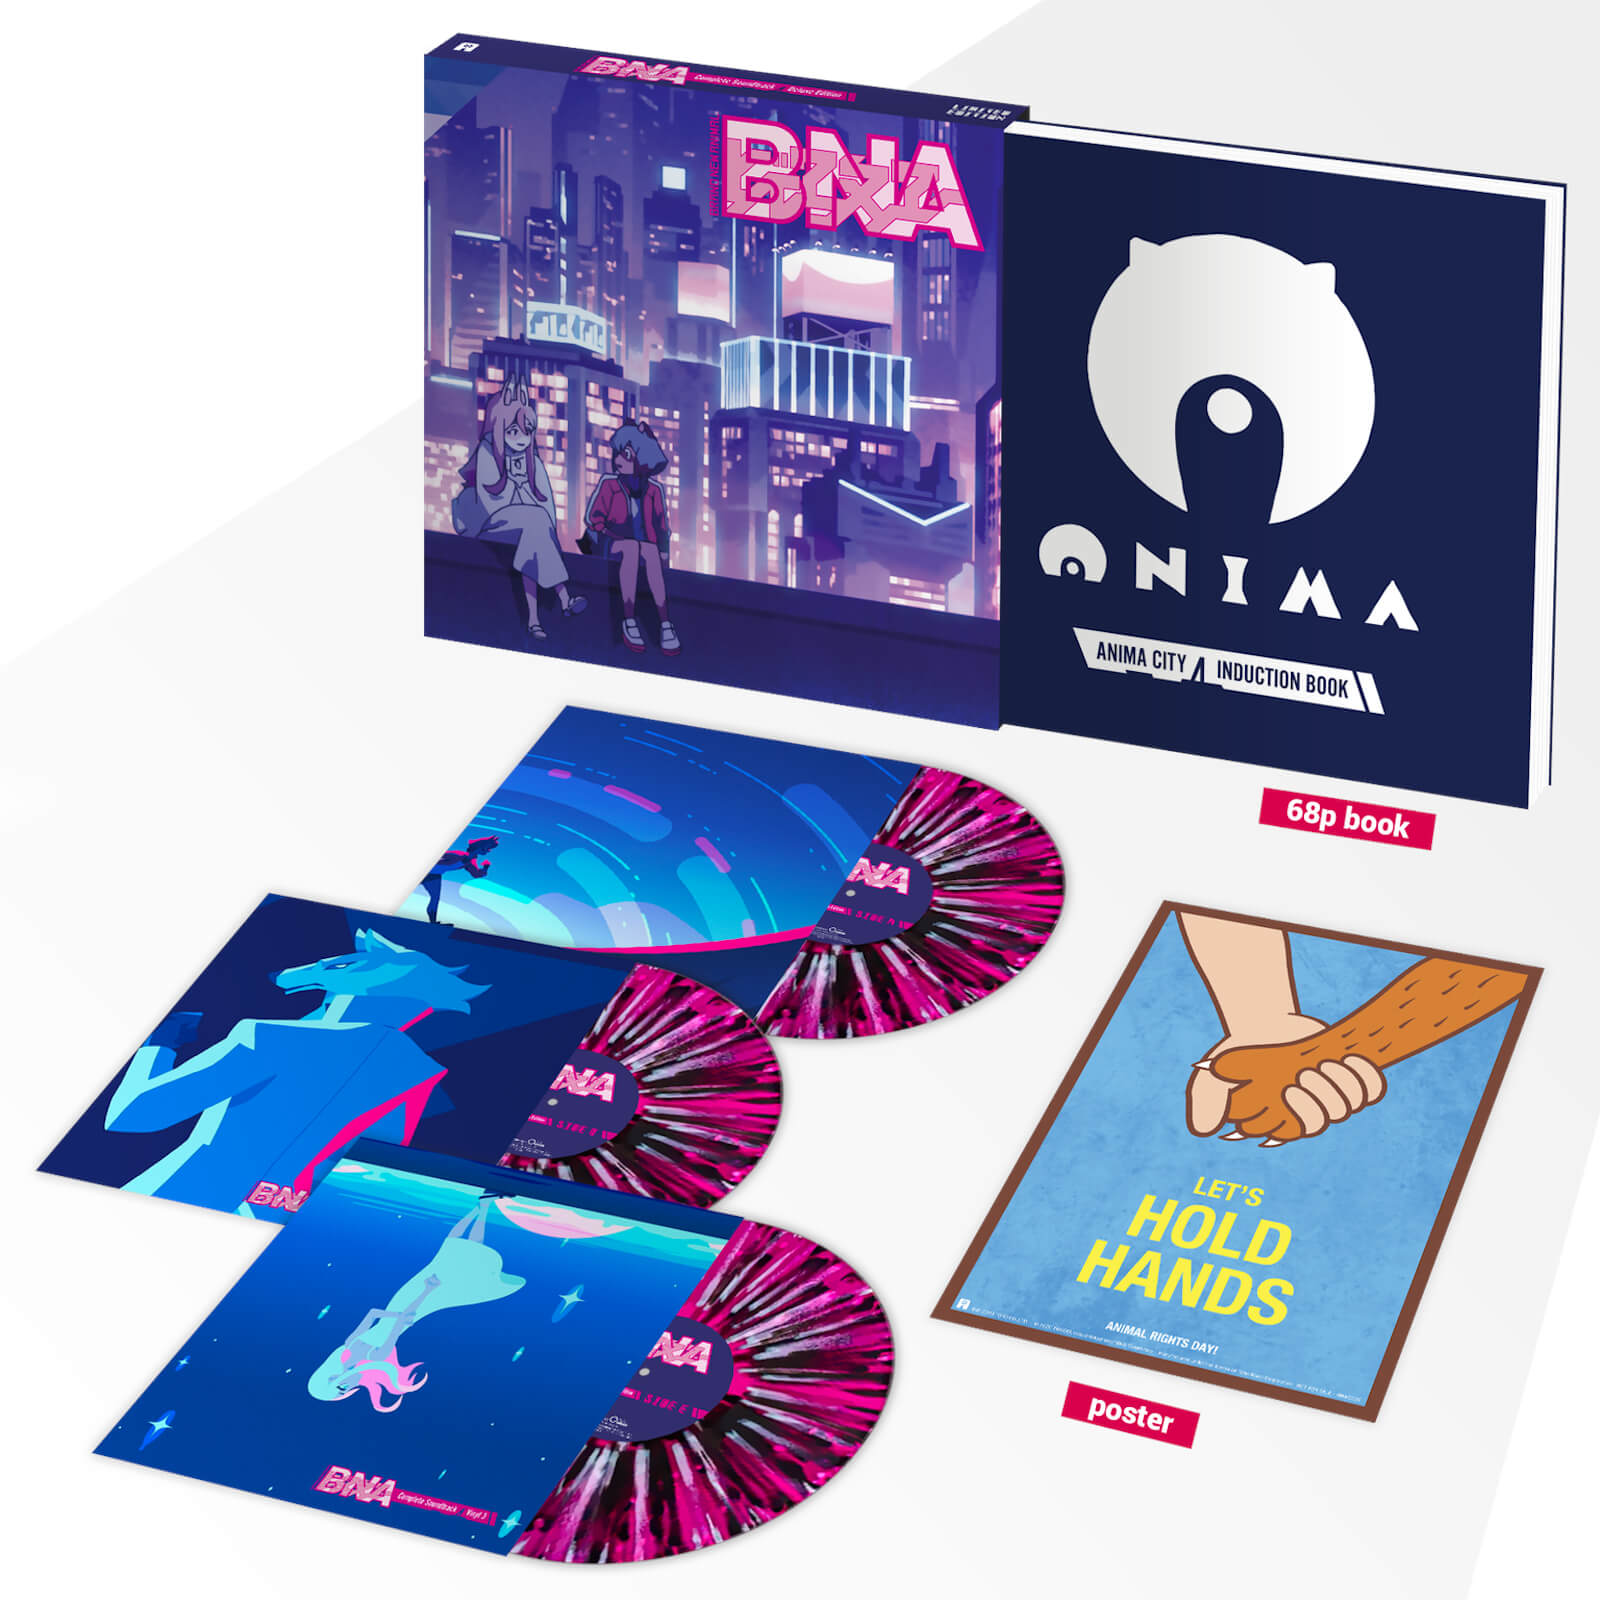 BNA: Brand New Animal Soundtrack - Zavvi Exclusive Deluxe Edition 3LP